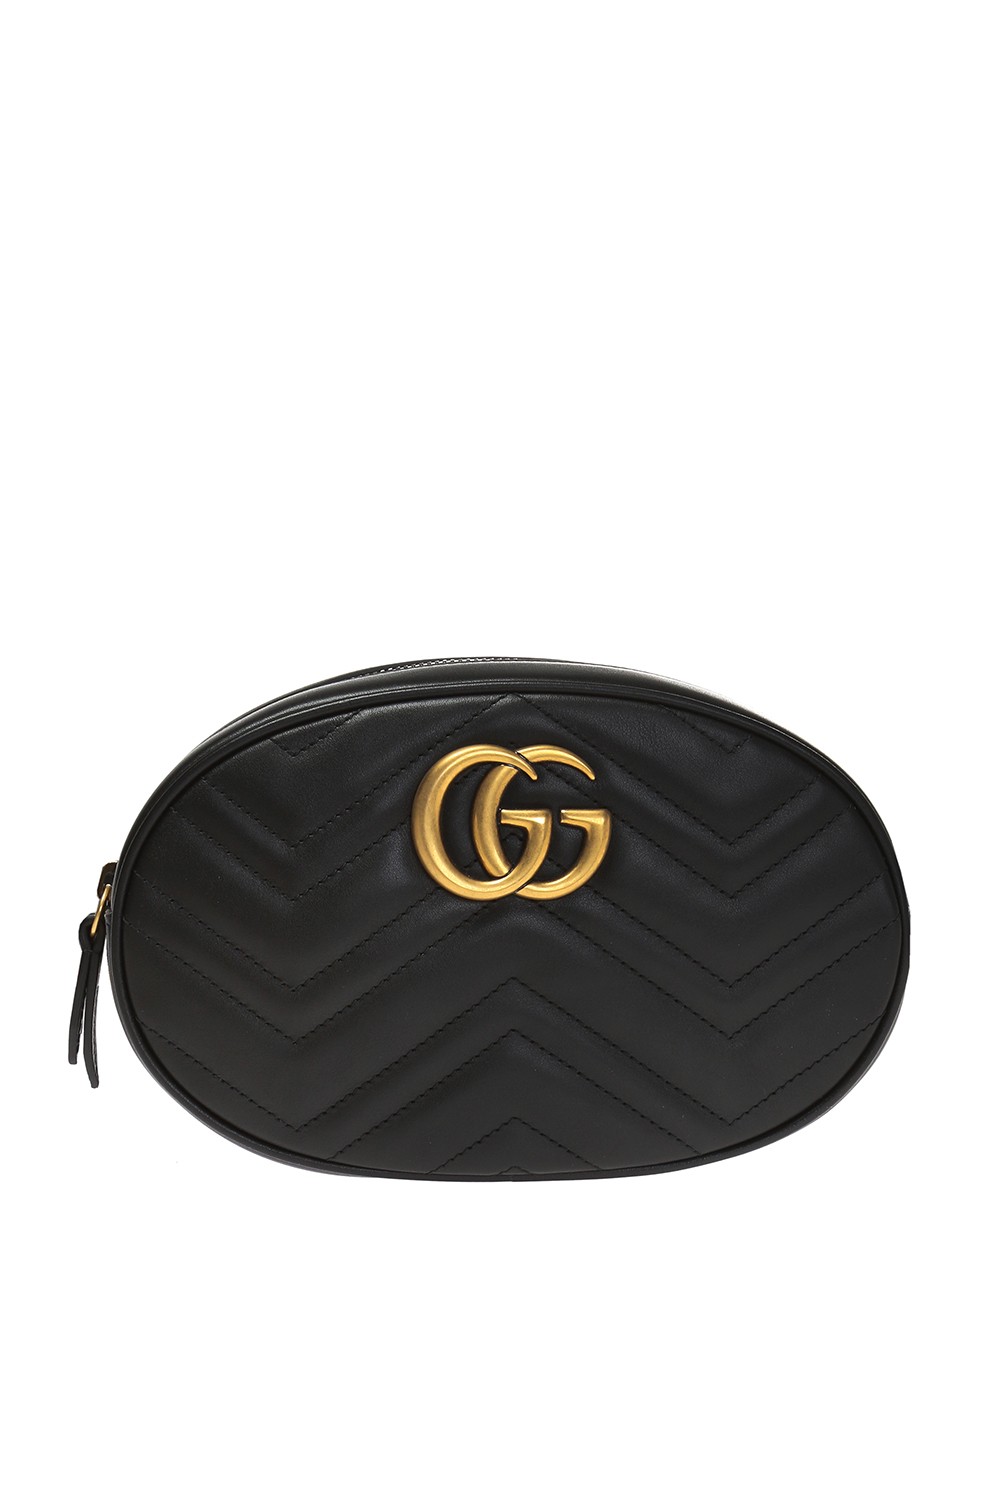 GG belt bag Gucci - Vitkac